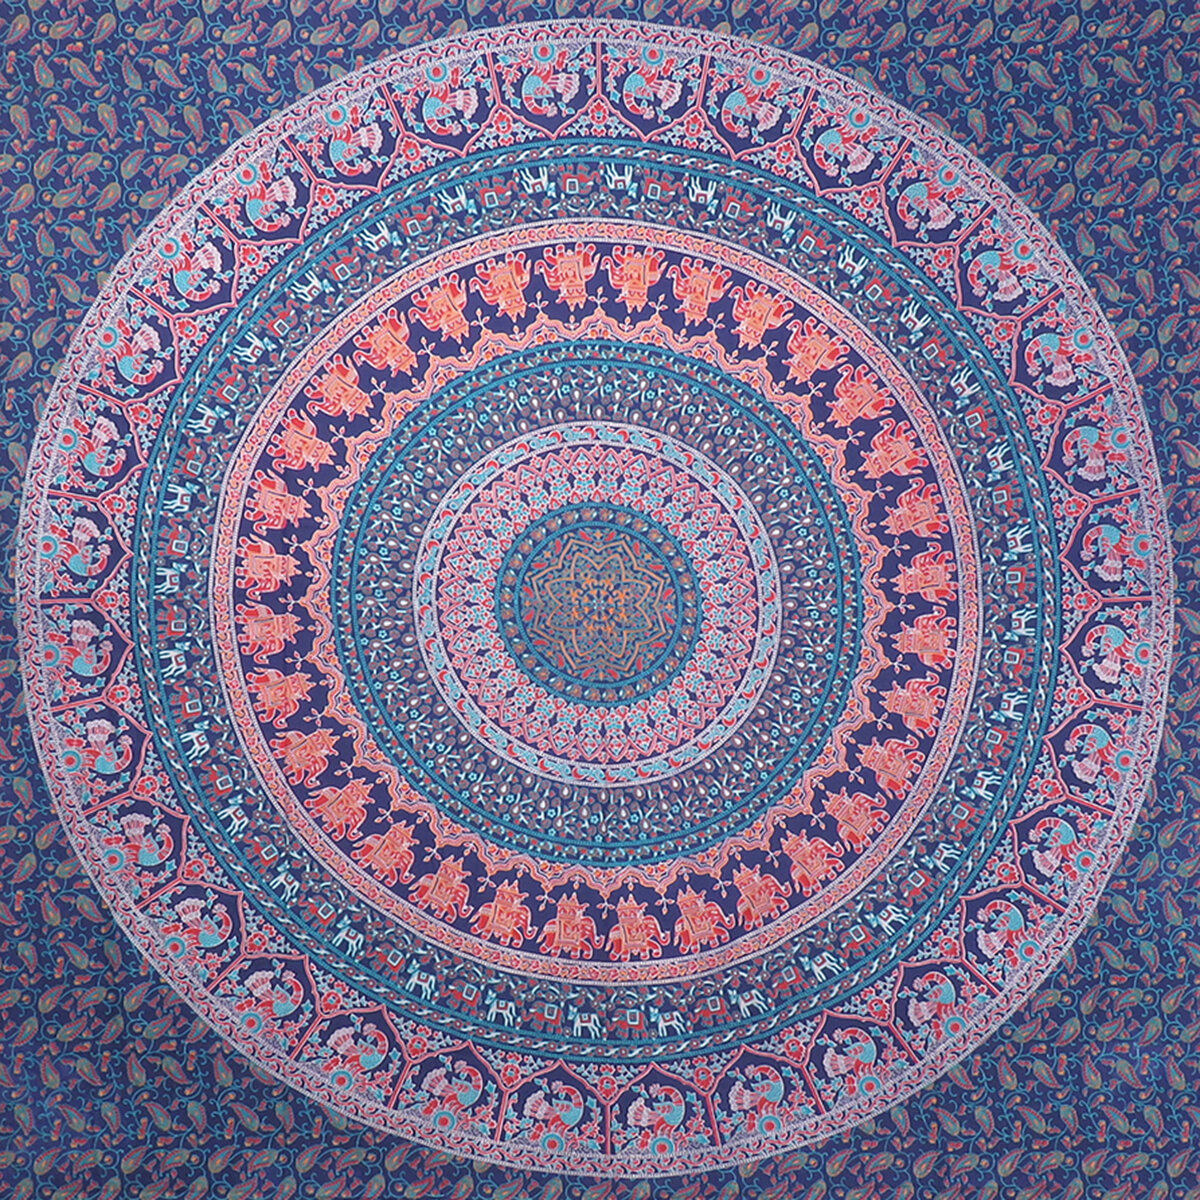 230x180cm/200x150cm/150x130cm India Mandala Tapestry Wall Hanging Decor Wall Cloth Tapestries Sandy 